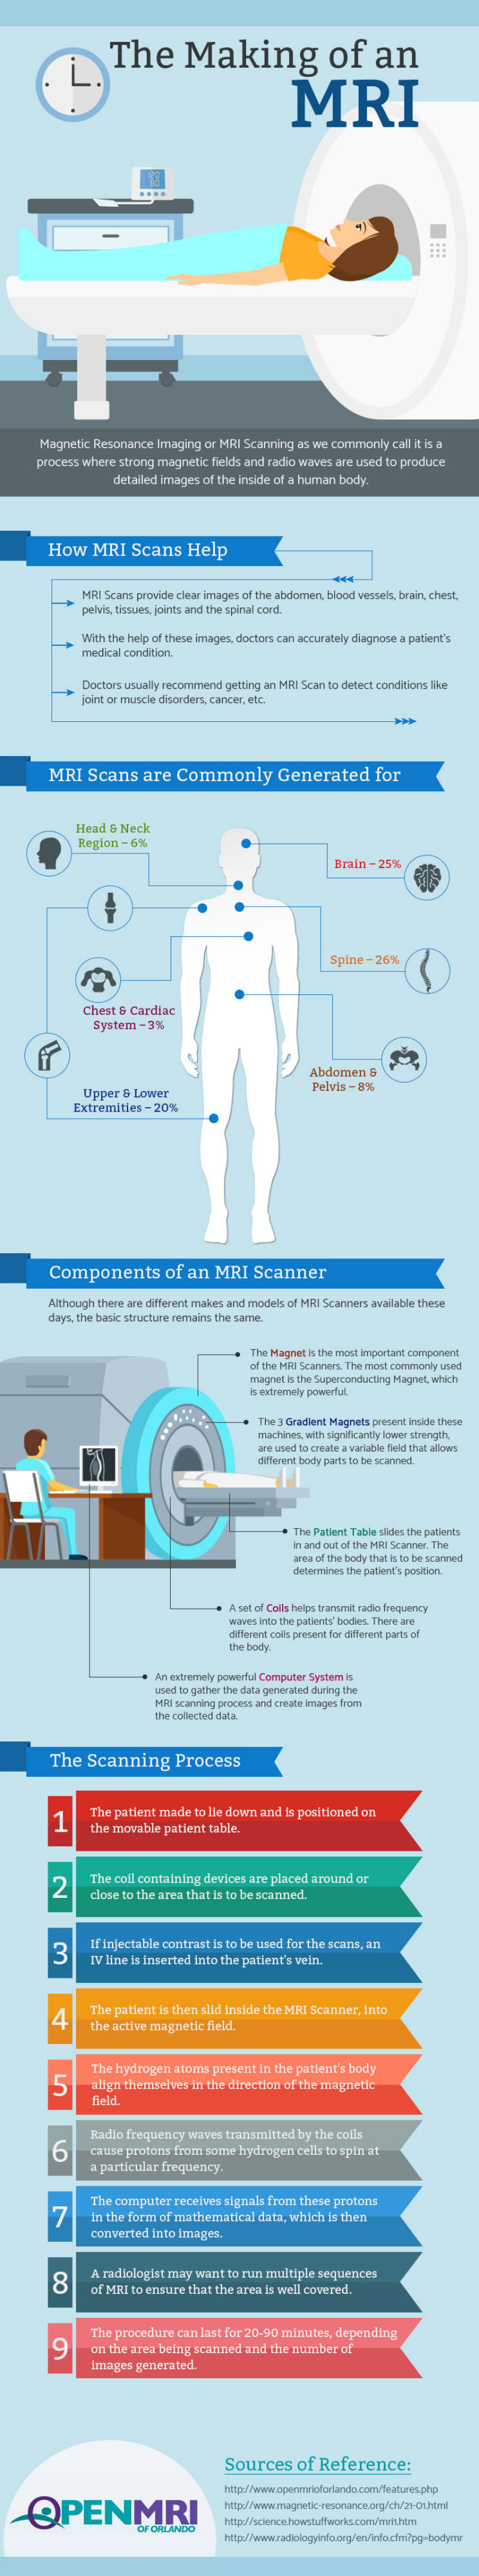 The Making of an MRI -  Open MRI of Orlando